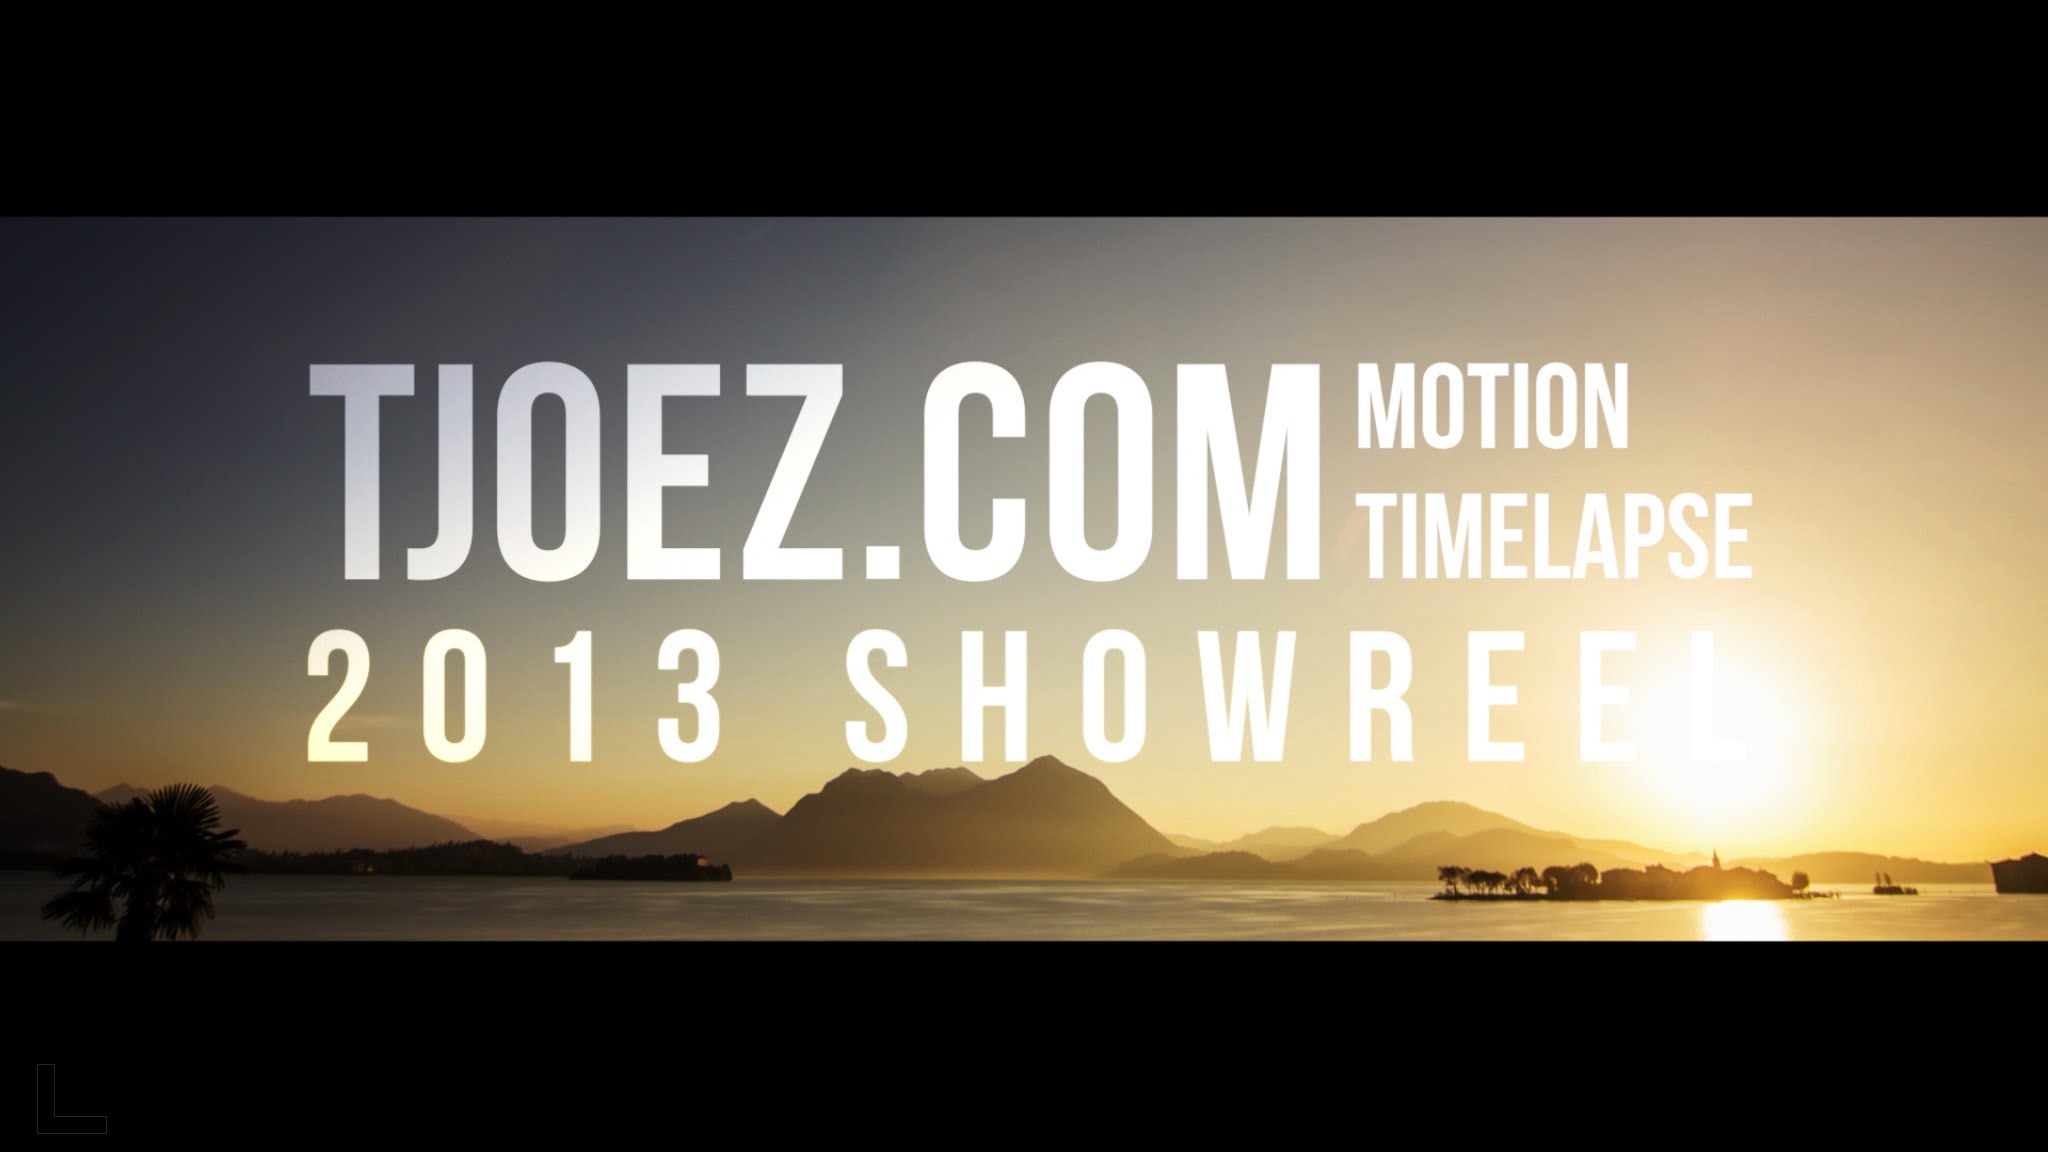 Tjoez.com Motion Timelapse 2013